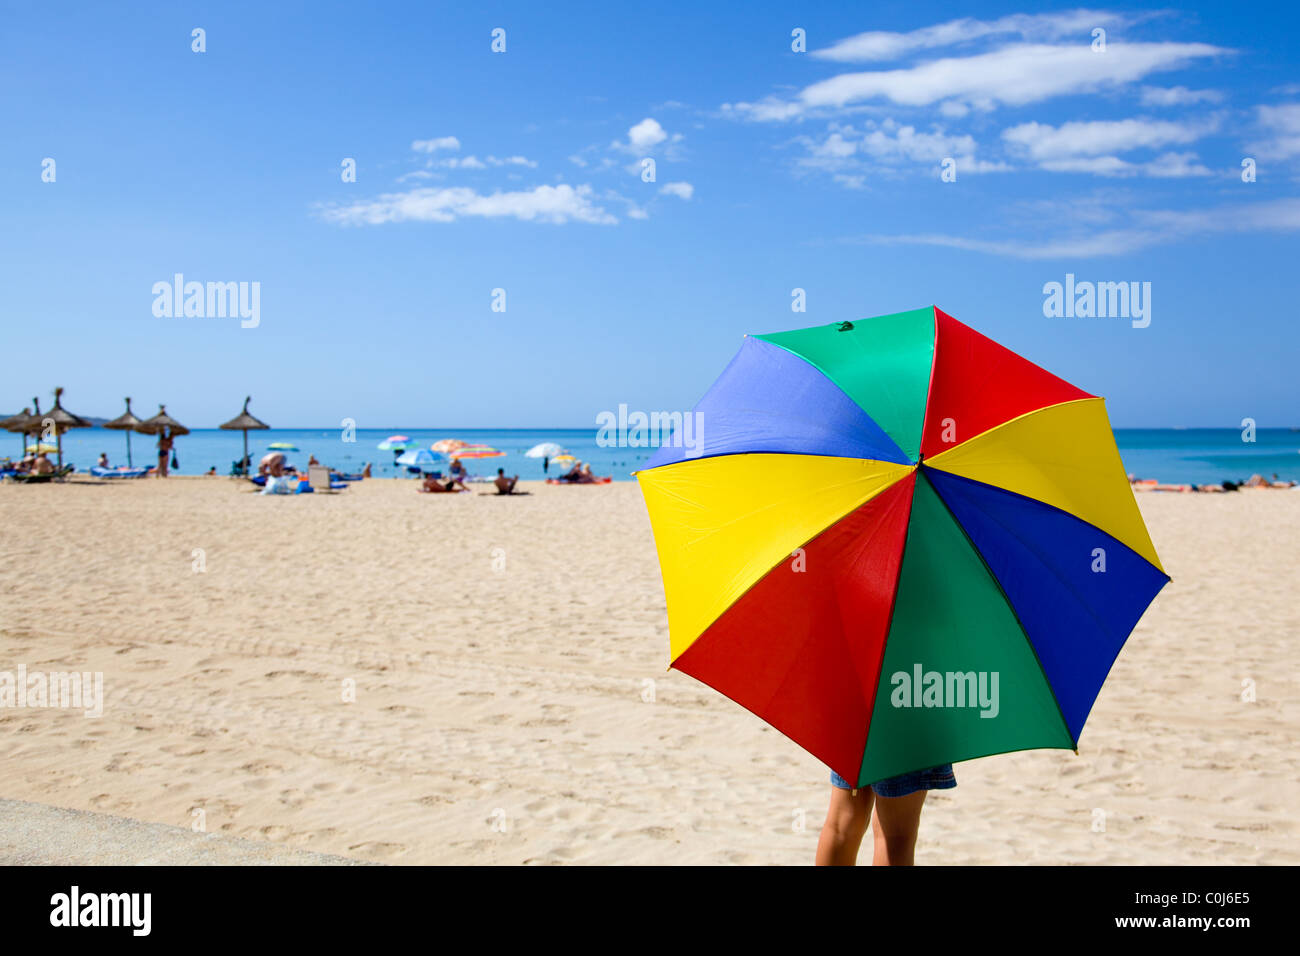 Umbrella at the beach Stock Photo